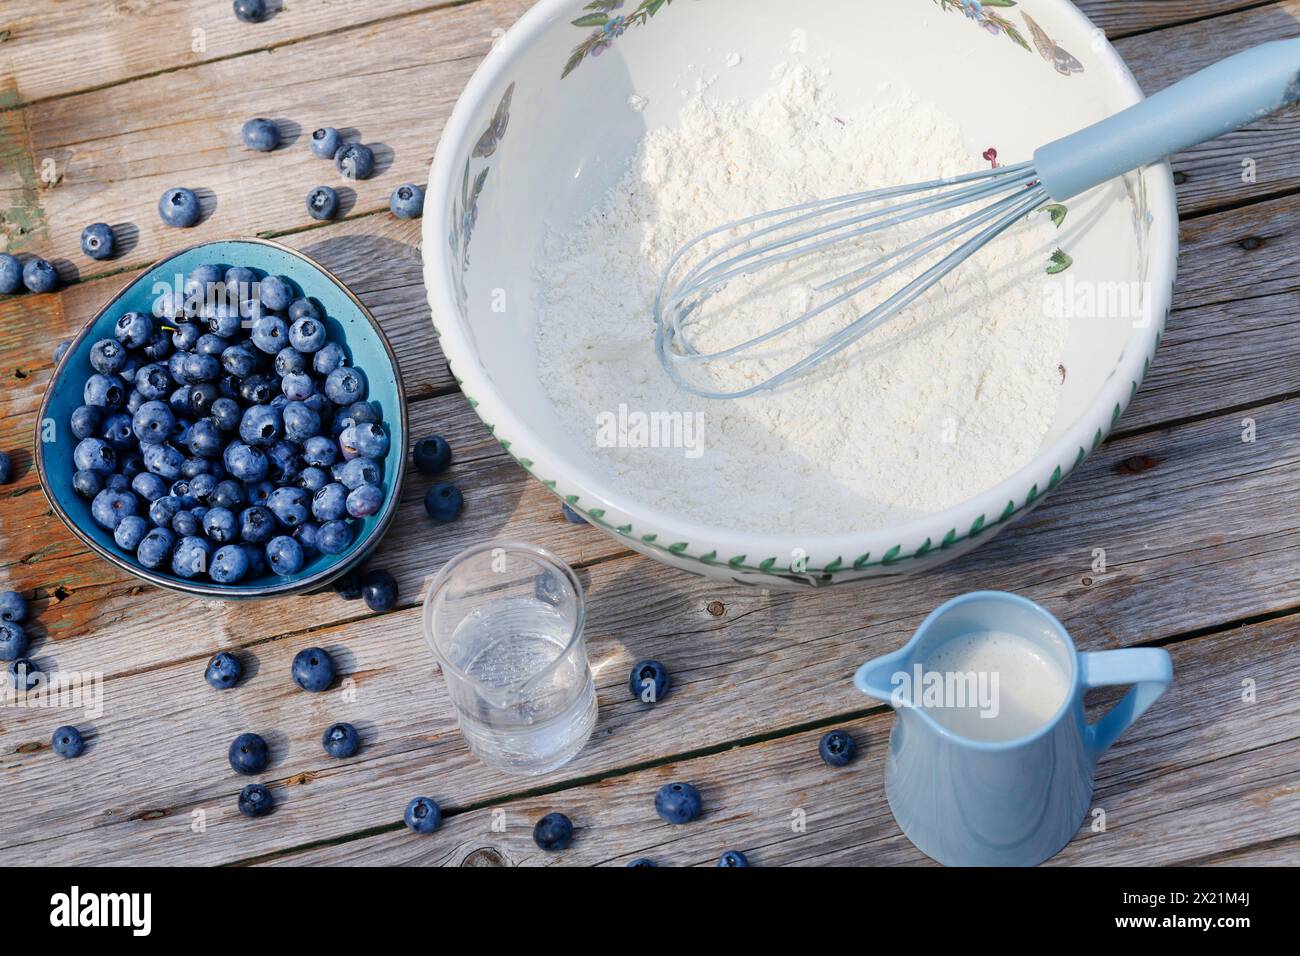 vegan making of Blueberry pancakes, step 1; ingredients: Spelt flour, sugar, salt, baking powder, mineral water, oat milk, blueberries, series image 1 Stock Photo